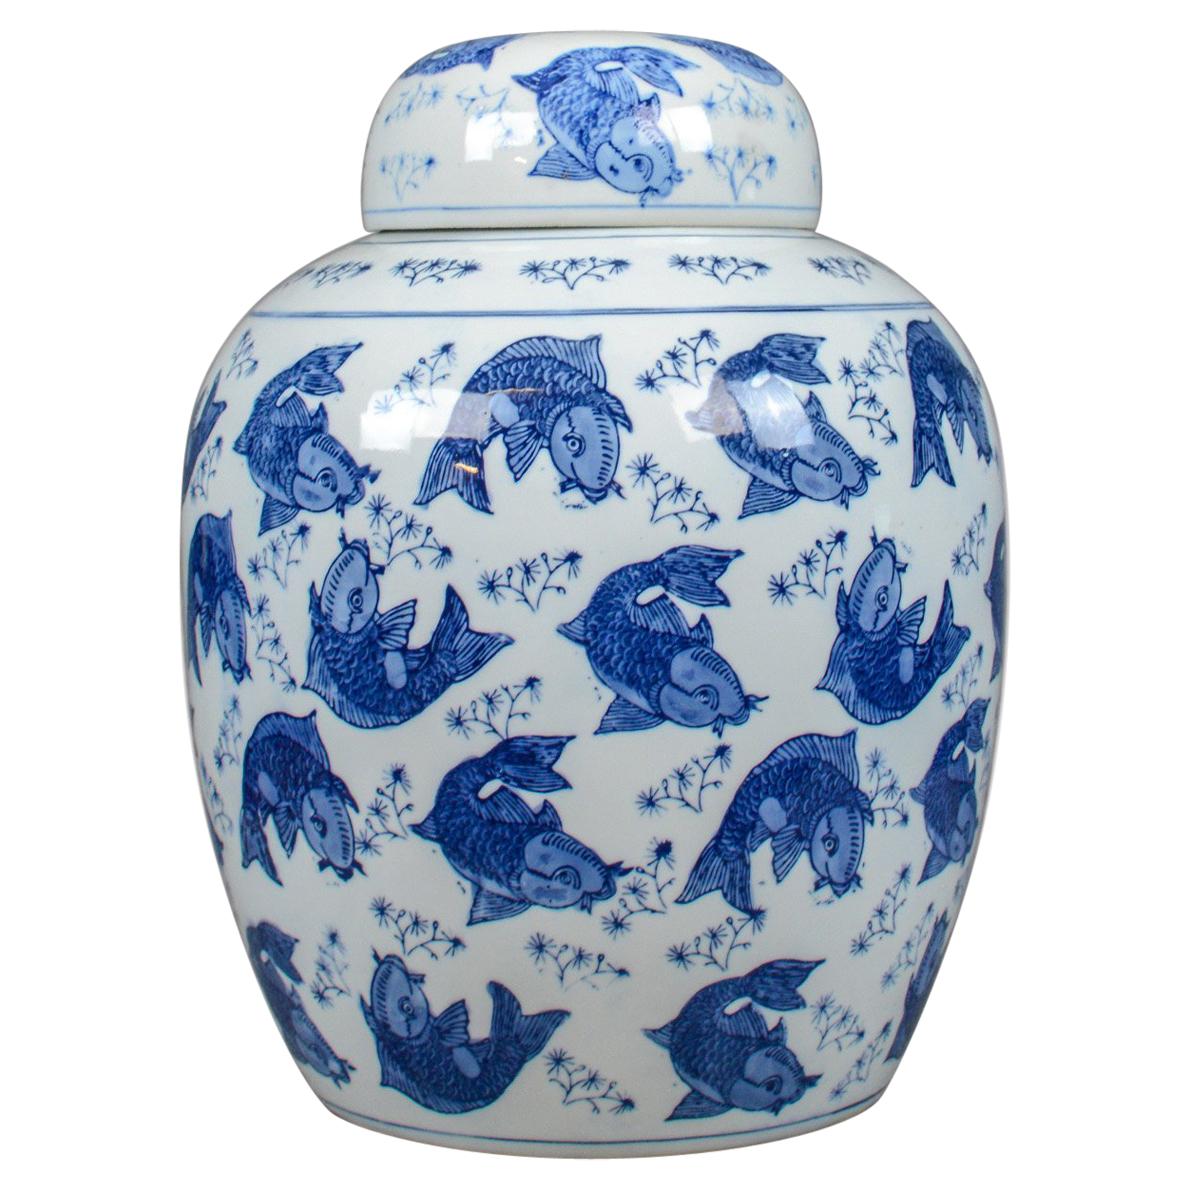 Large Oriental Ginger Jar, Vintage, Decorative Ceramic Vase, Koi Carp Fish